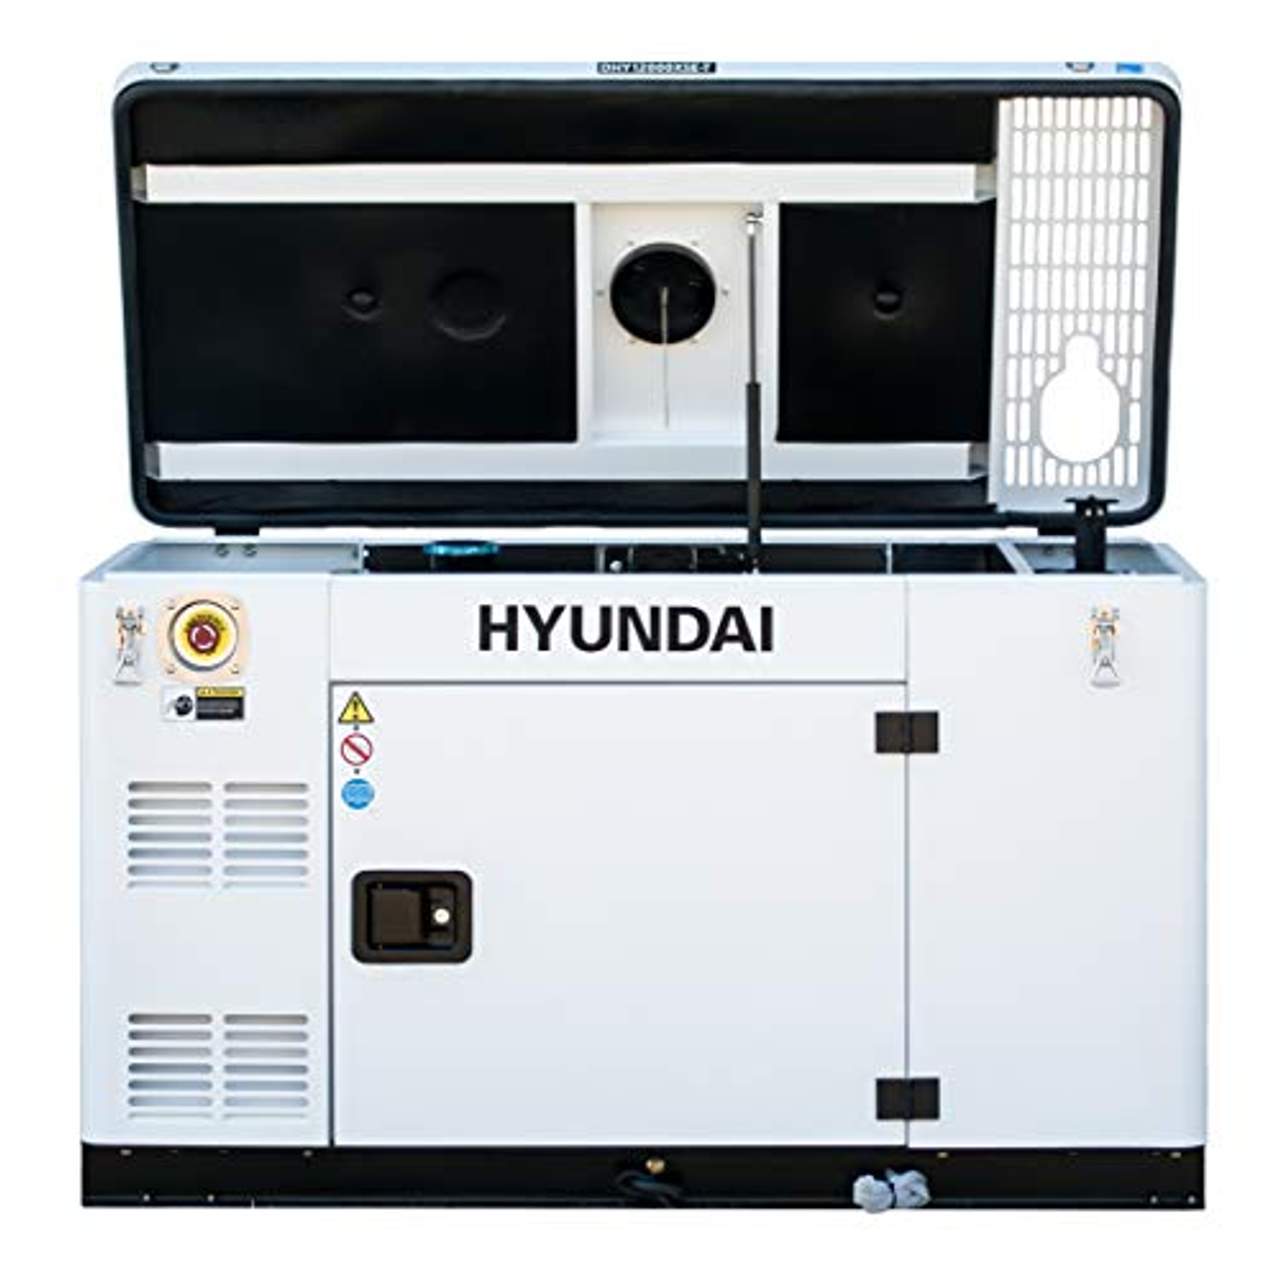 Hyundai HY-DHY12000XSET Dieselgenerator FullPower